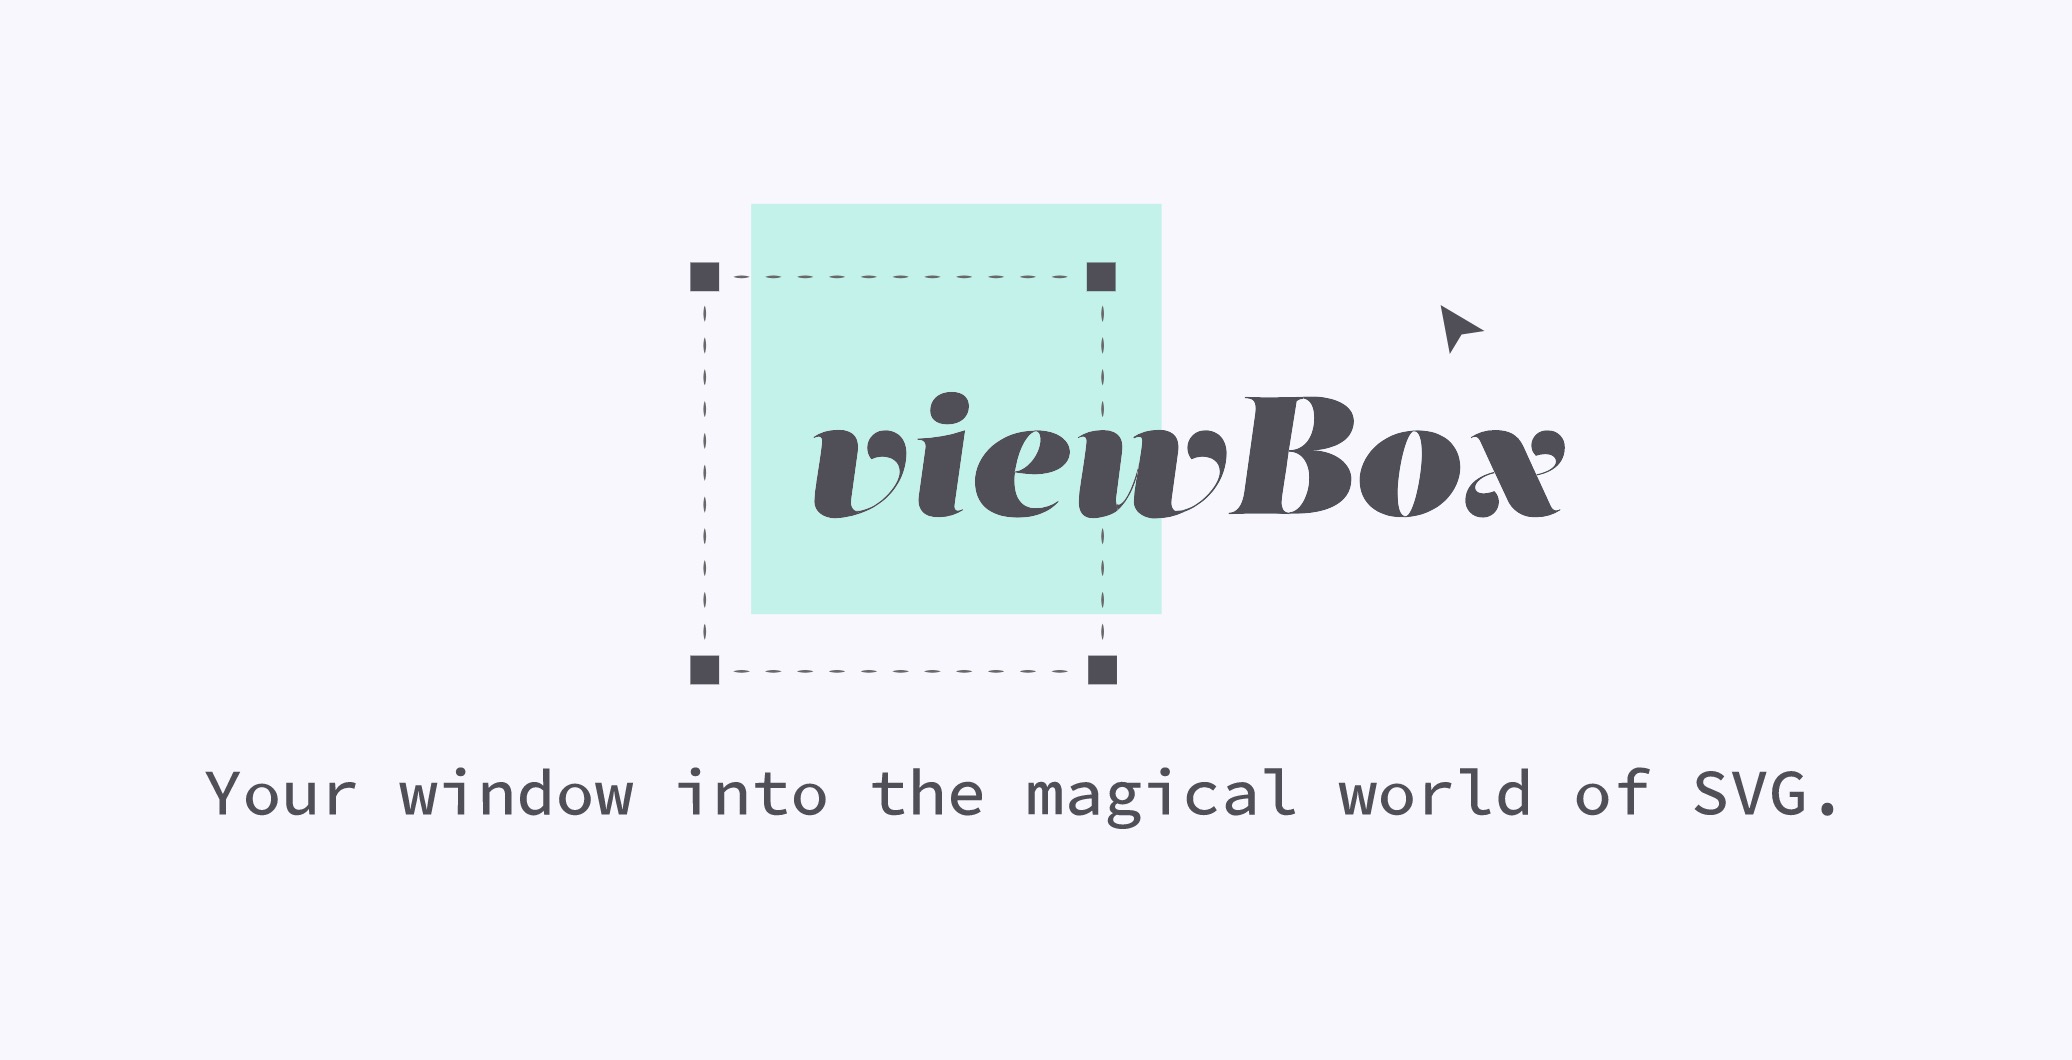 The viewBox logo, full constructed